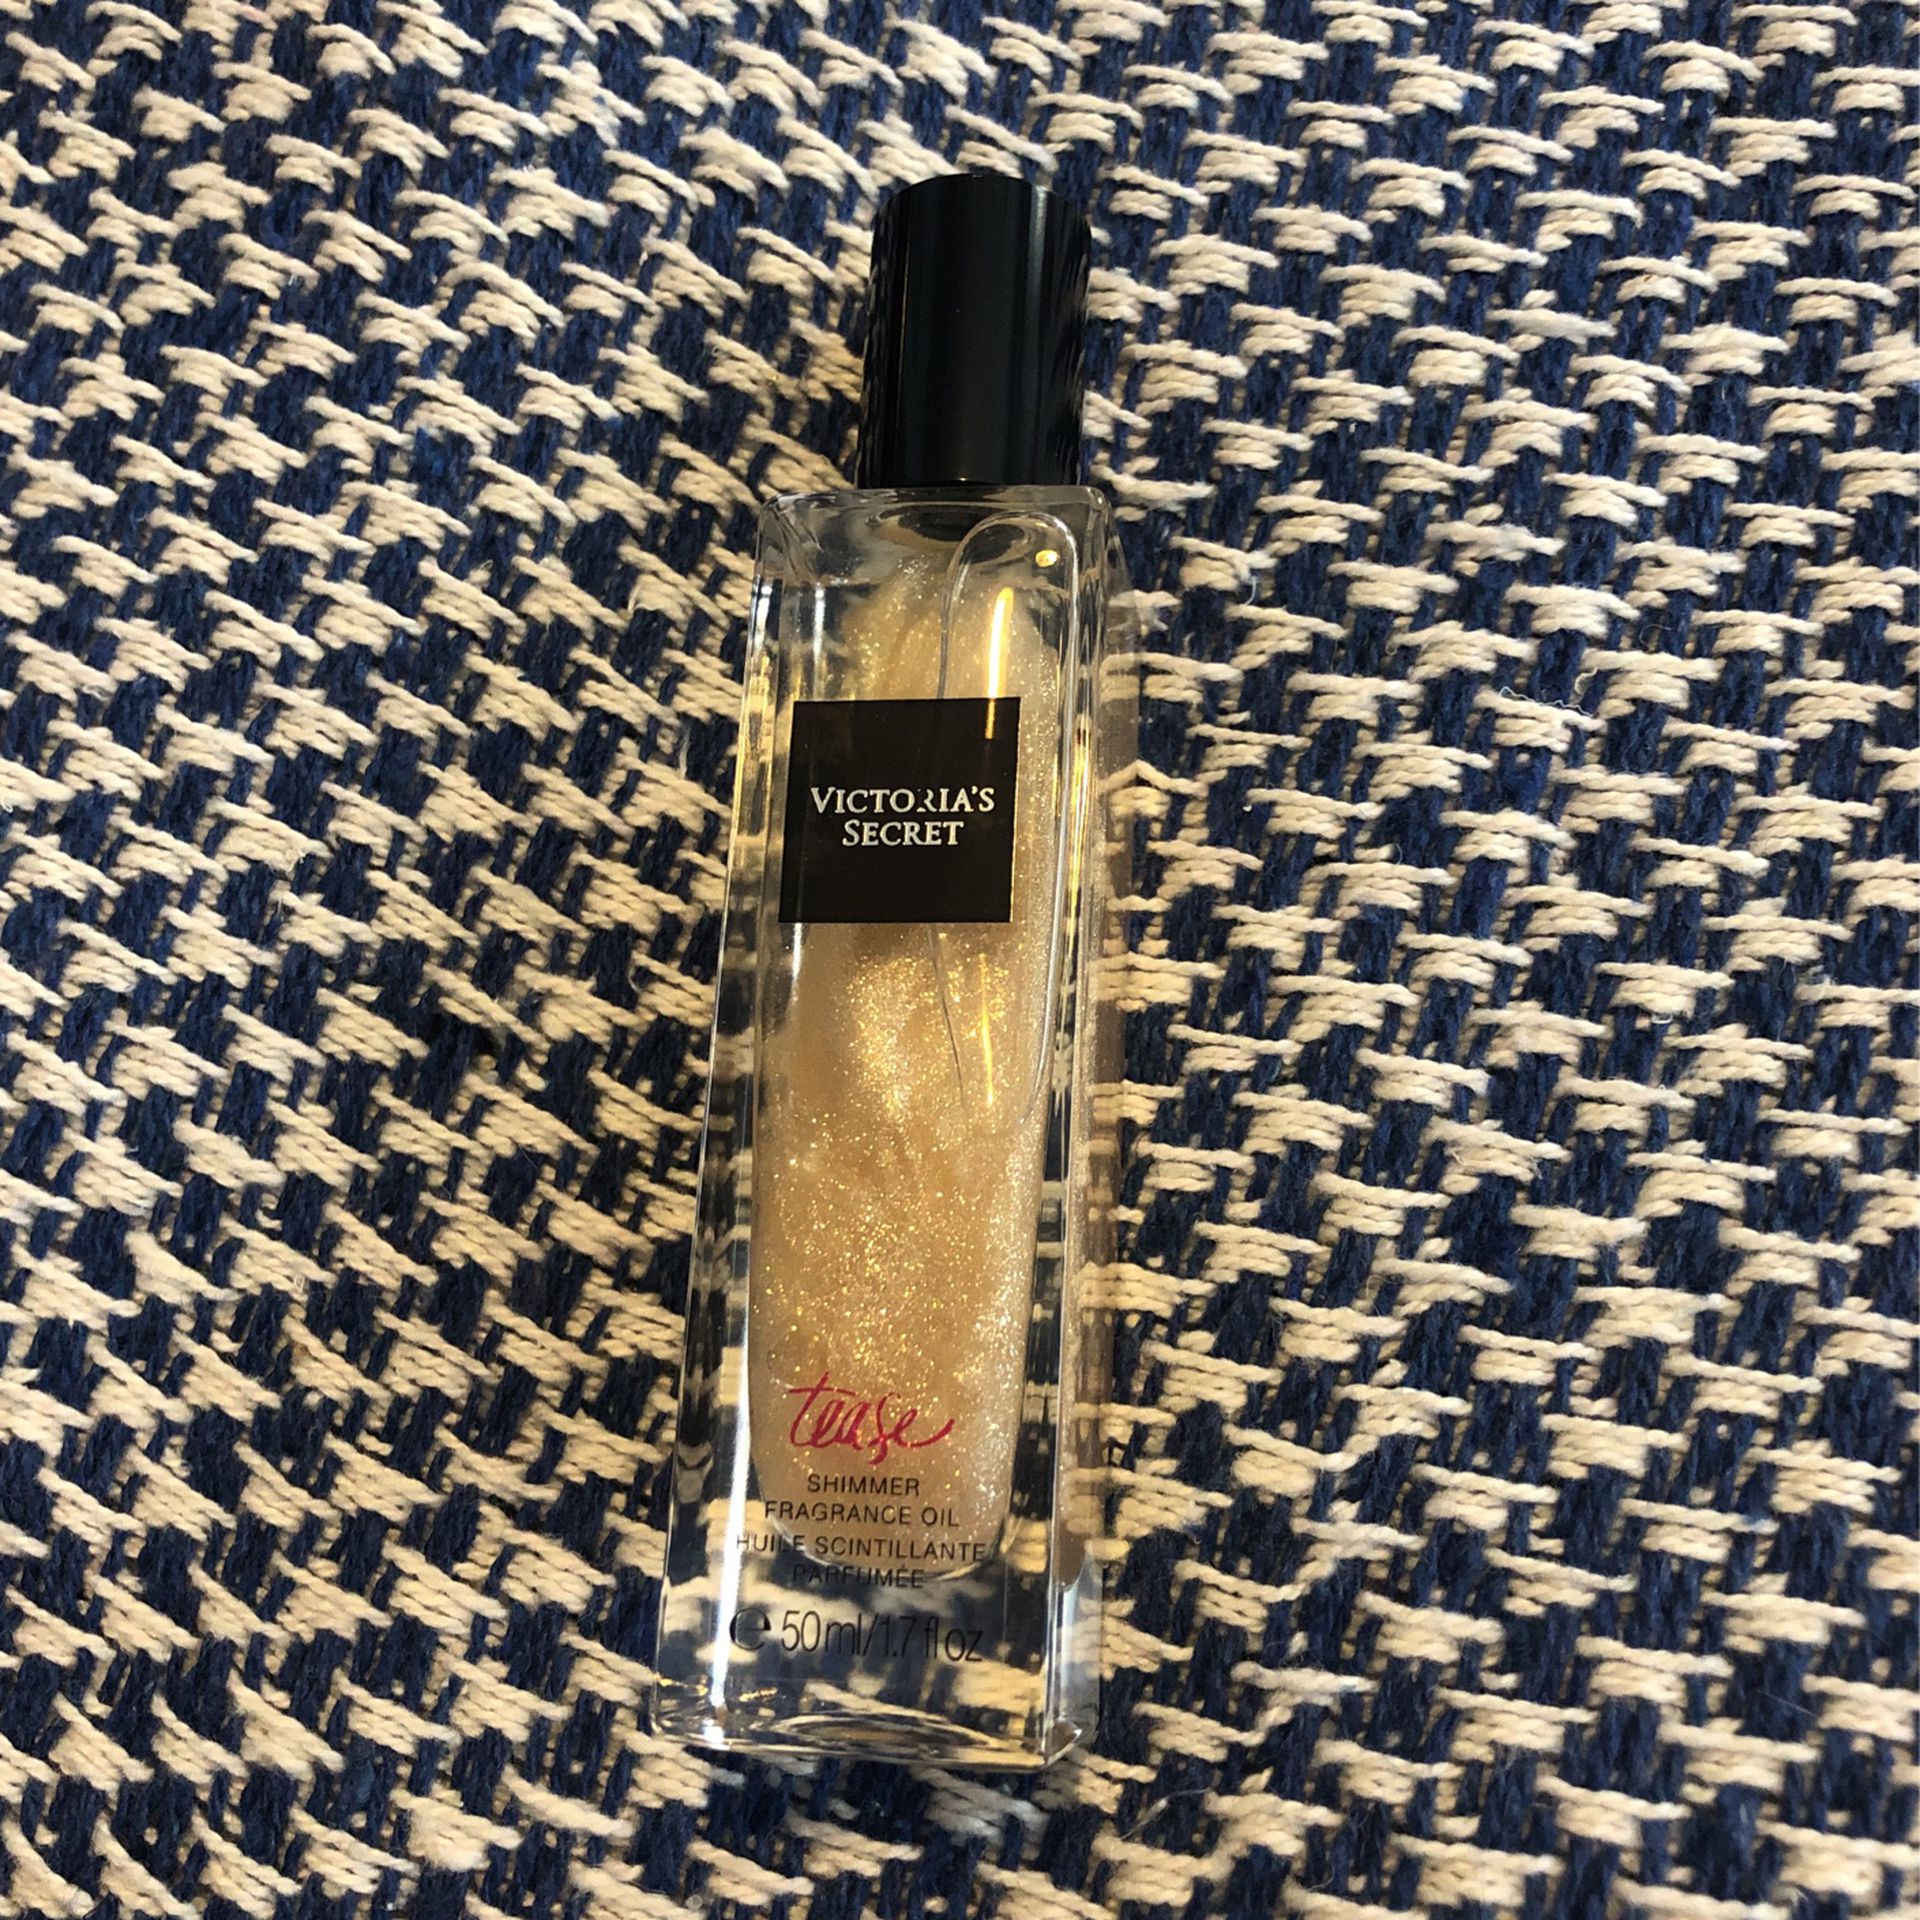 Victoria’s Secret TEASE Shimmer Fragrance Oil